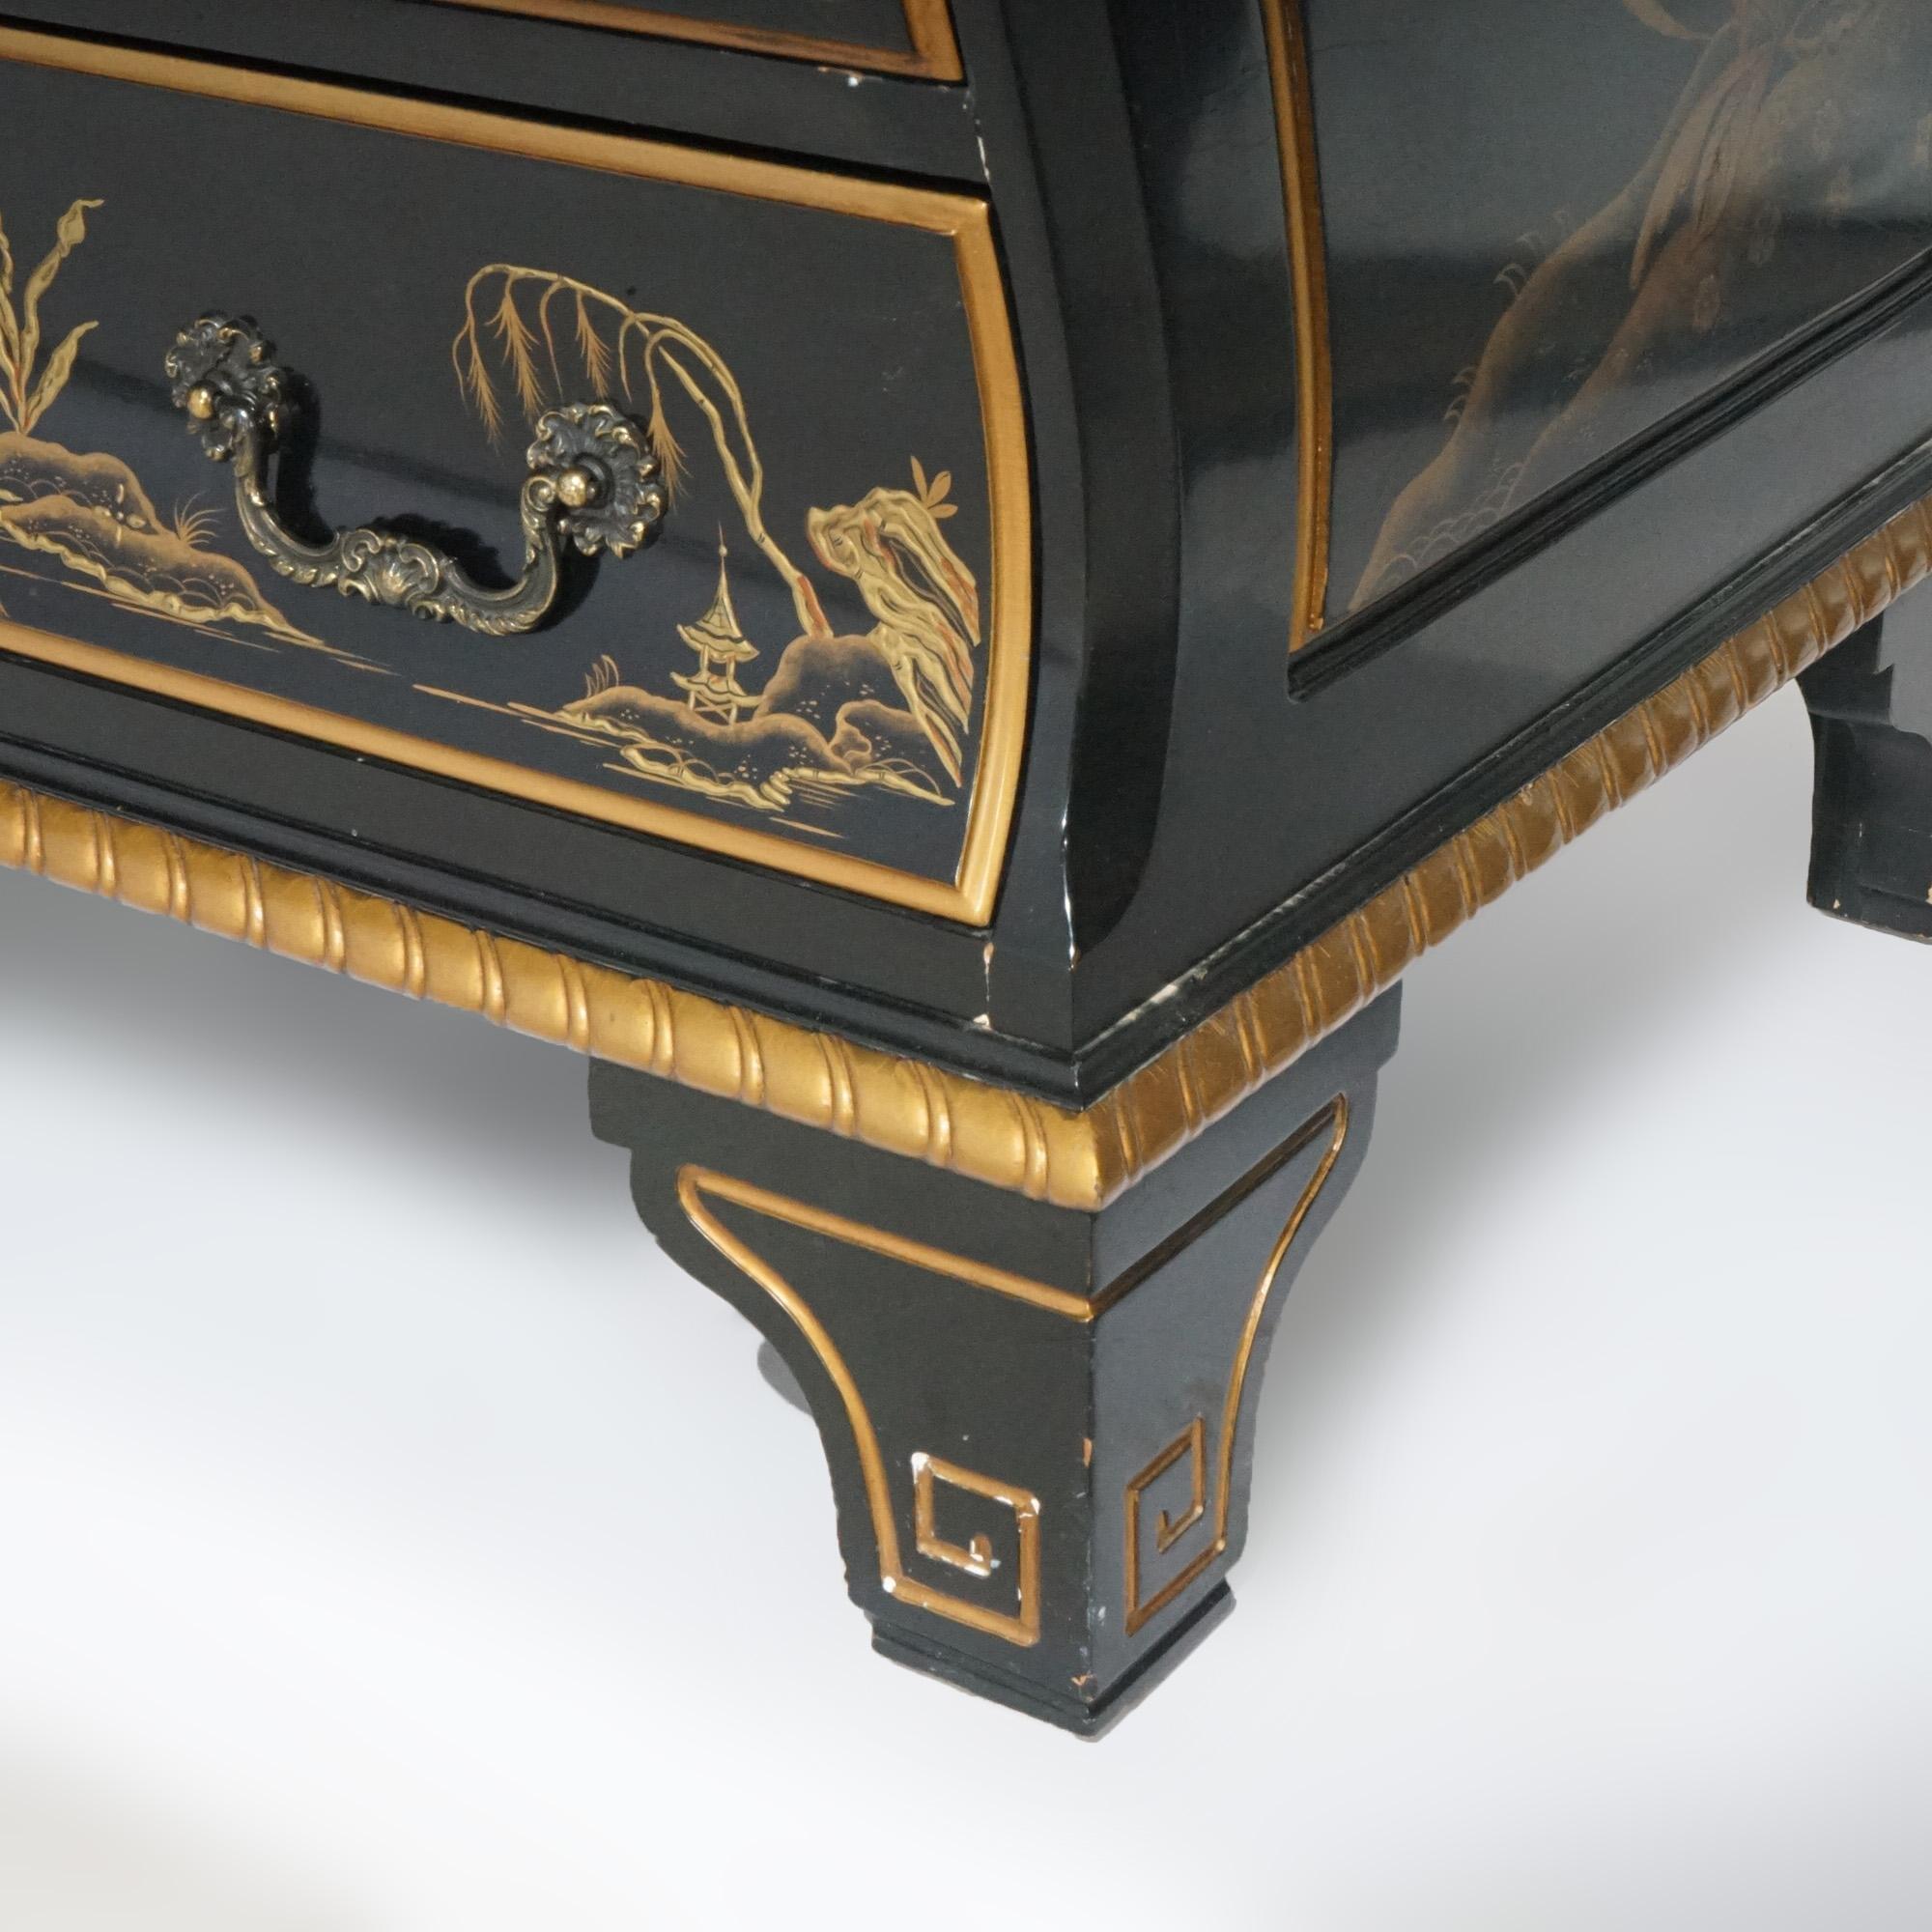 Karges Ebonized, Gilt & Chinoiserie Decorated Secretary Desk 20th Century For Sale 3